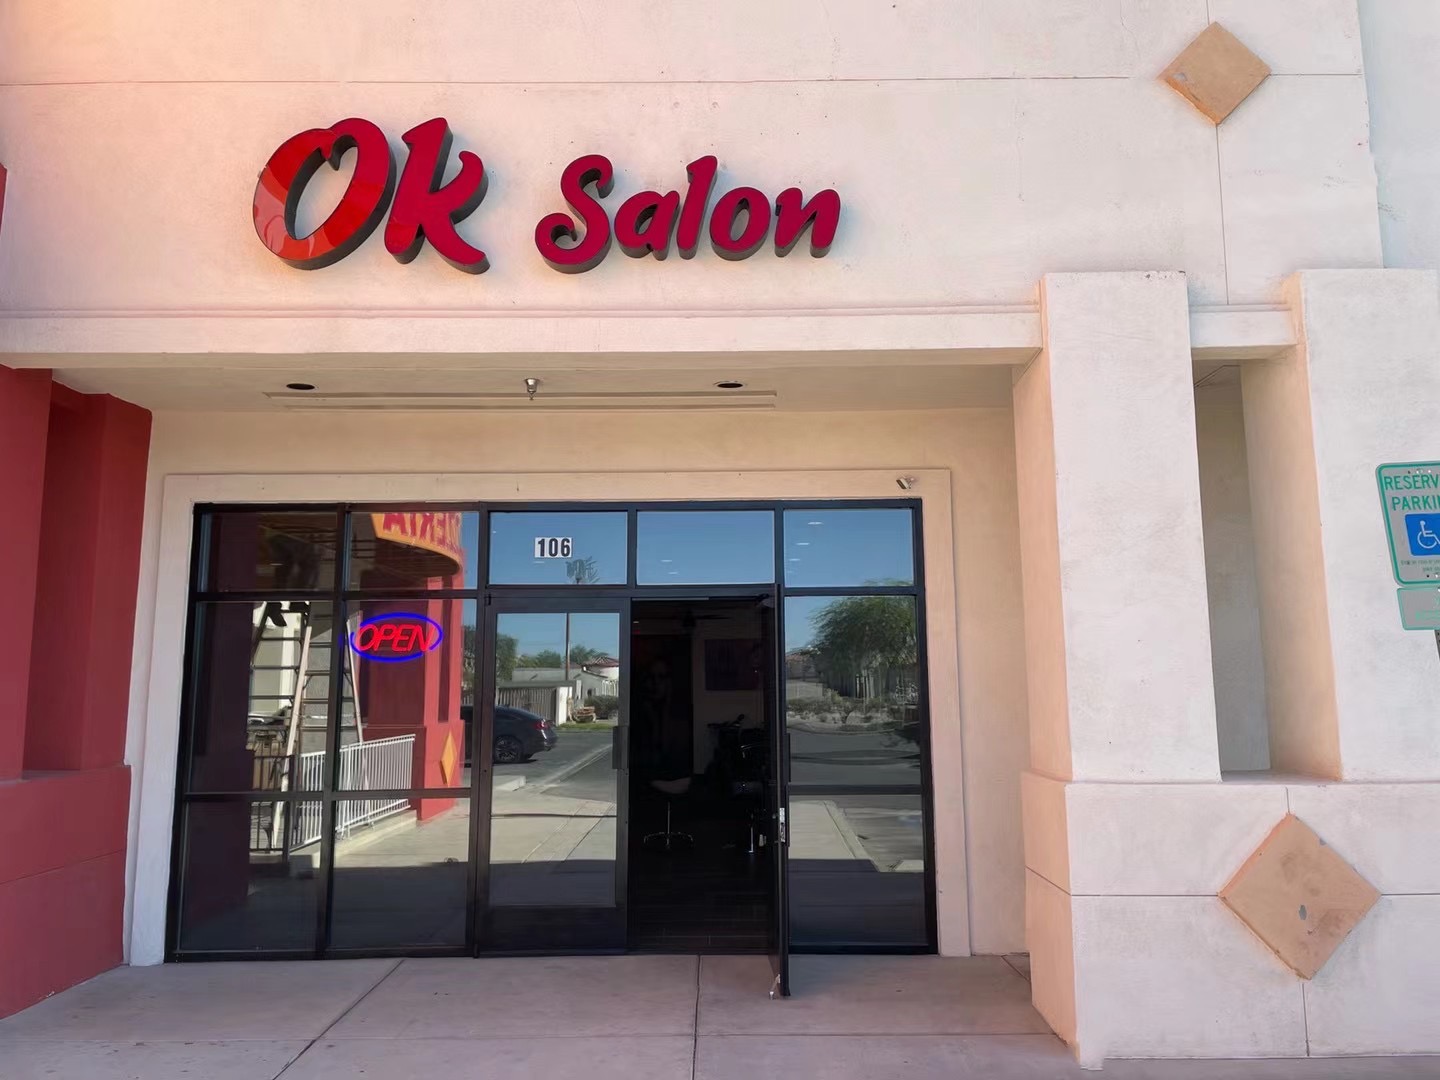 OK Salon